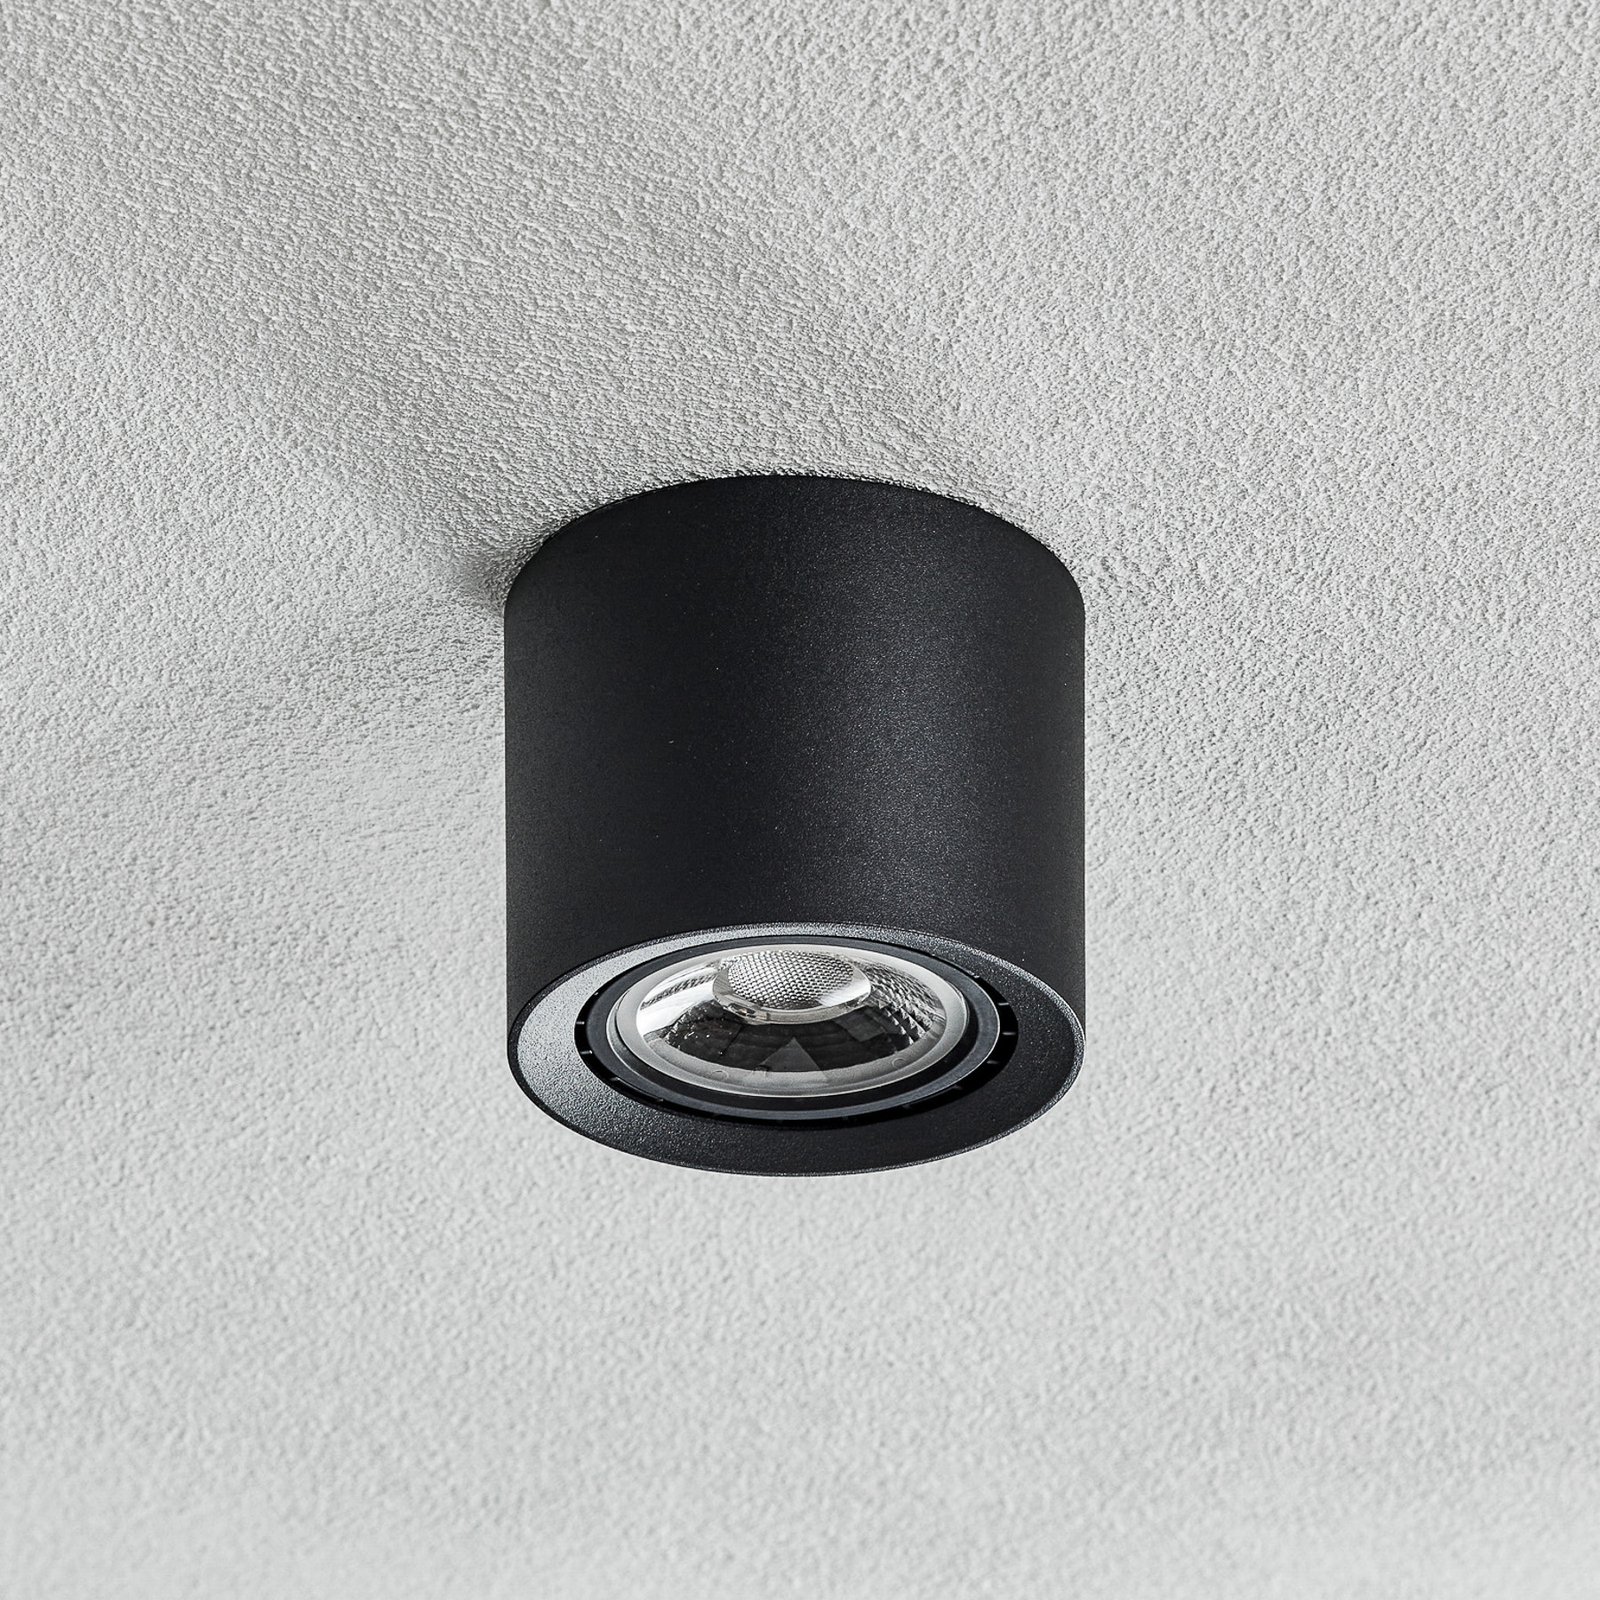 LED plafondlamp Fedler van Dime naar Warm, zwart